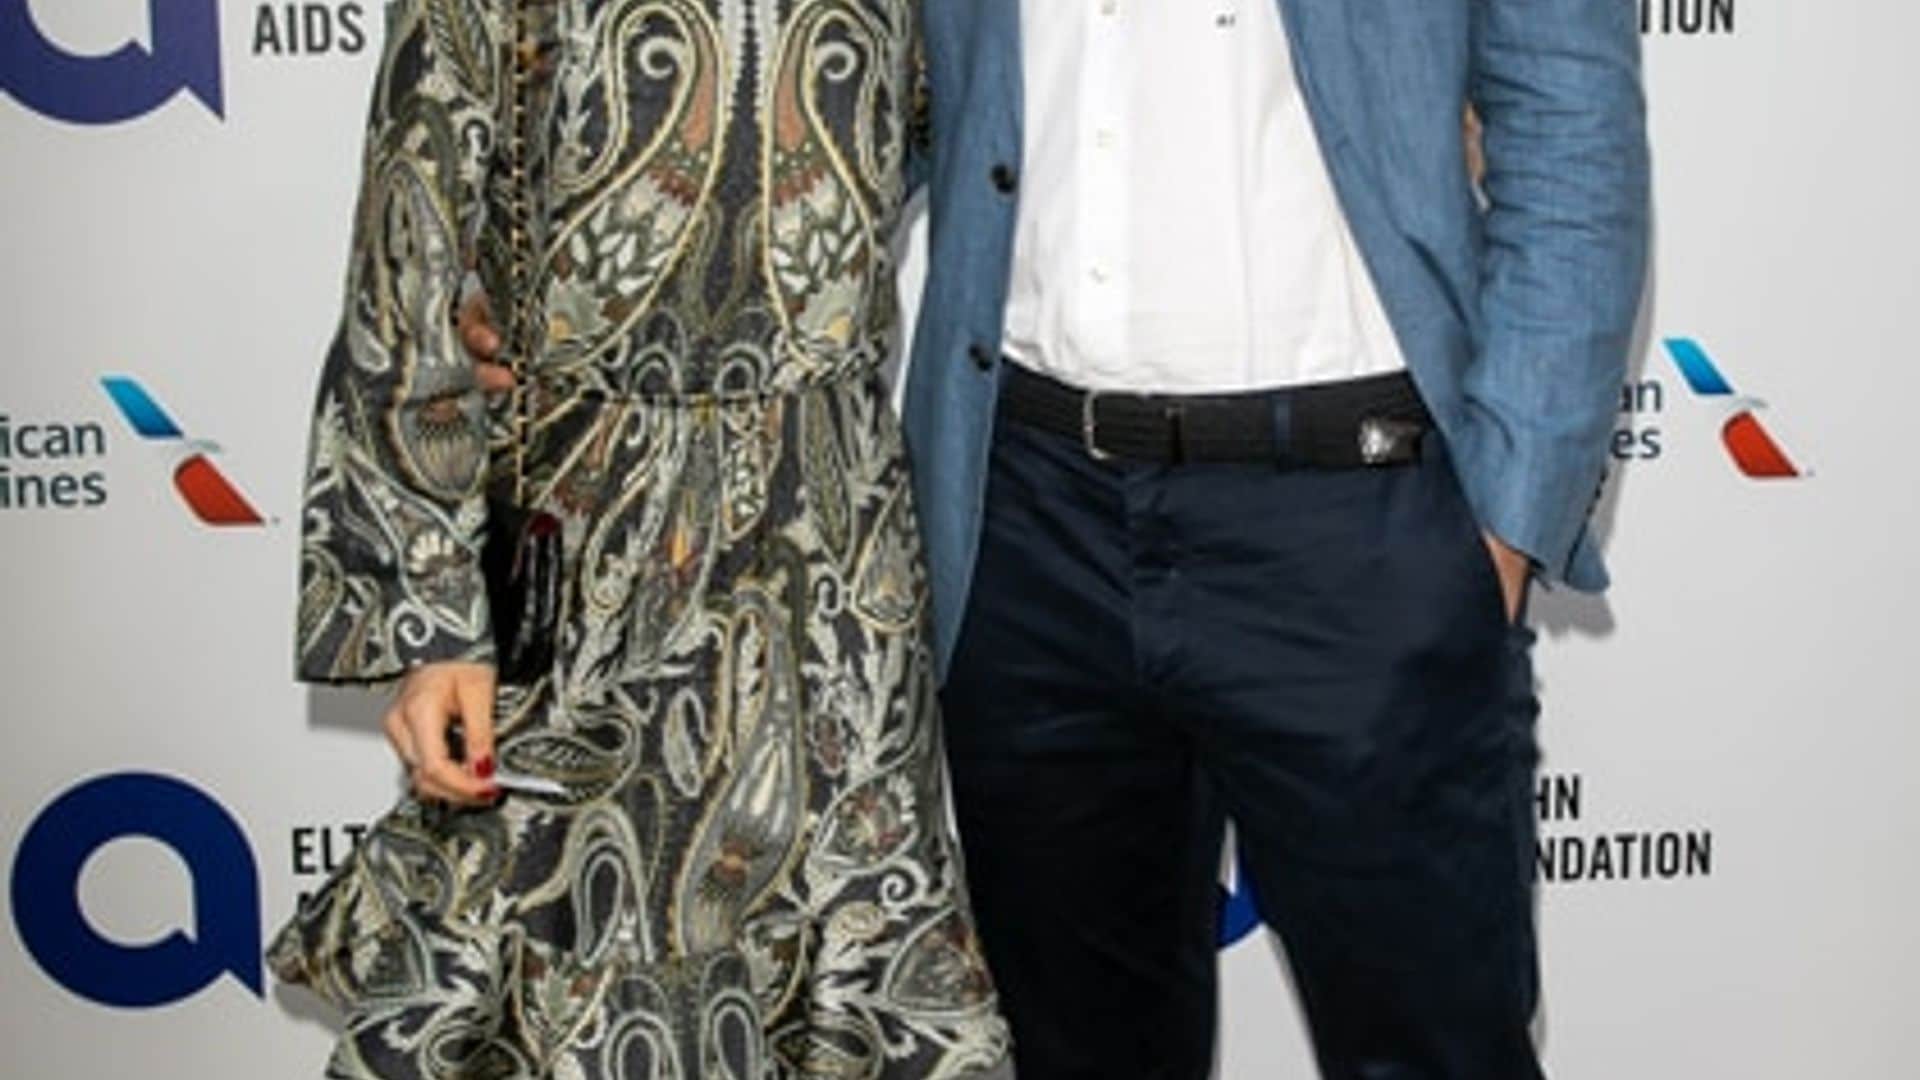 Princess Alexandra attends Elton John gala with boyfriend Ben